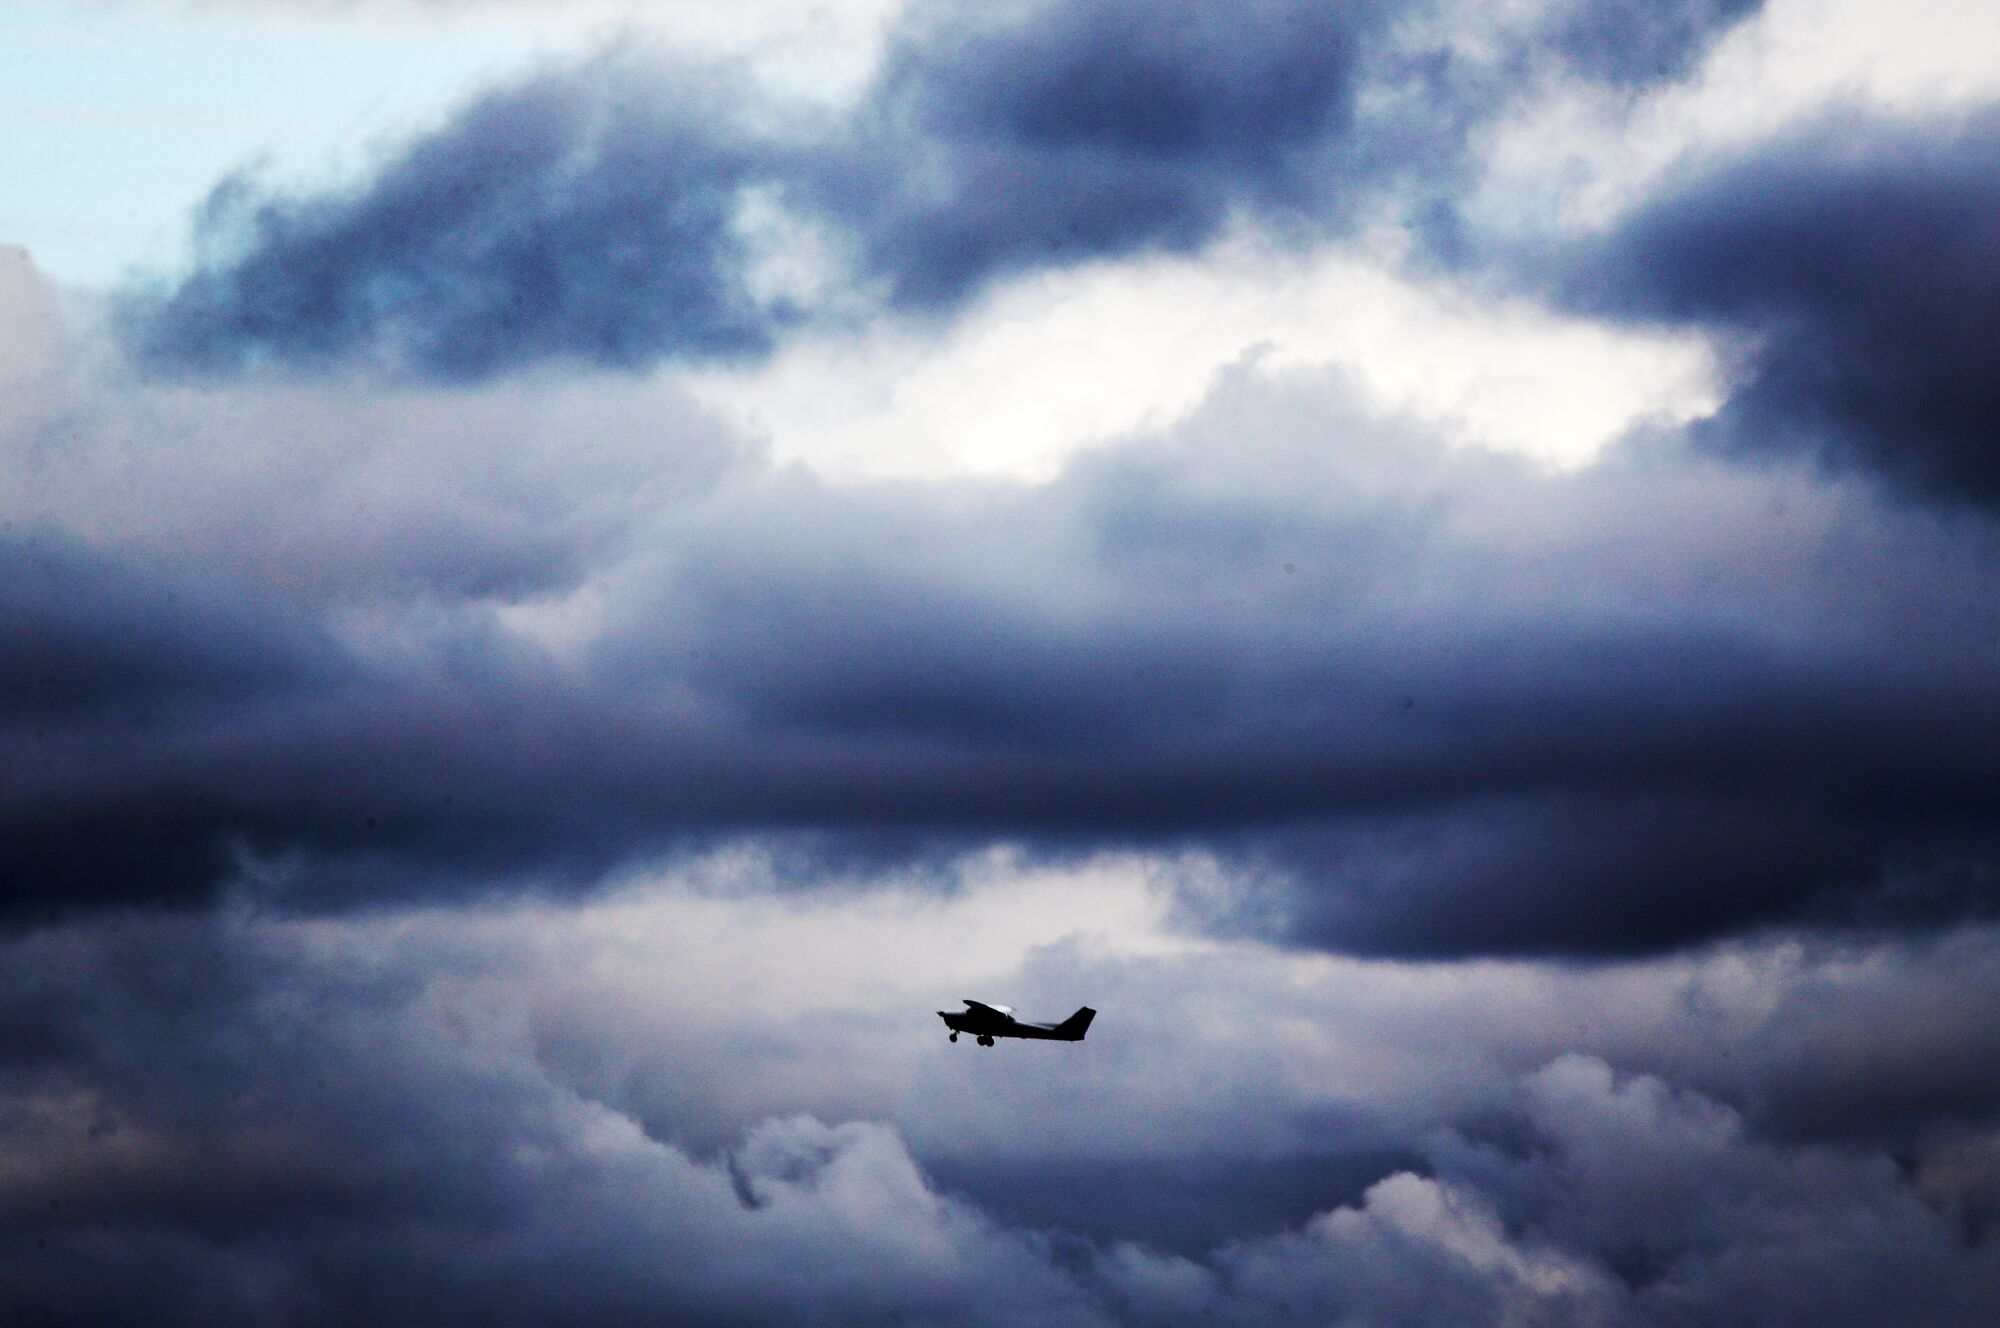 A plane takes off amid dark, heavy clouds.